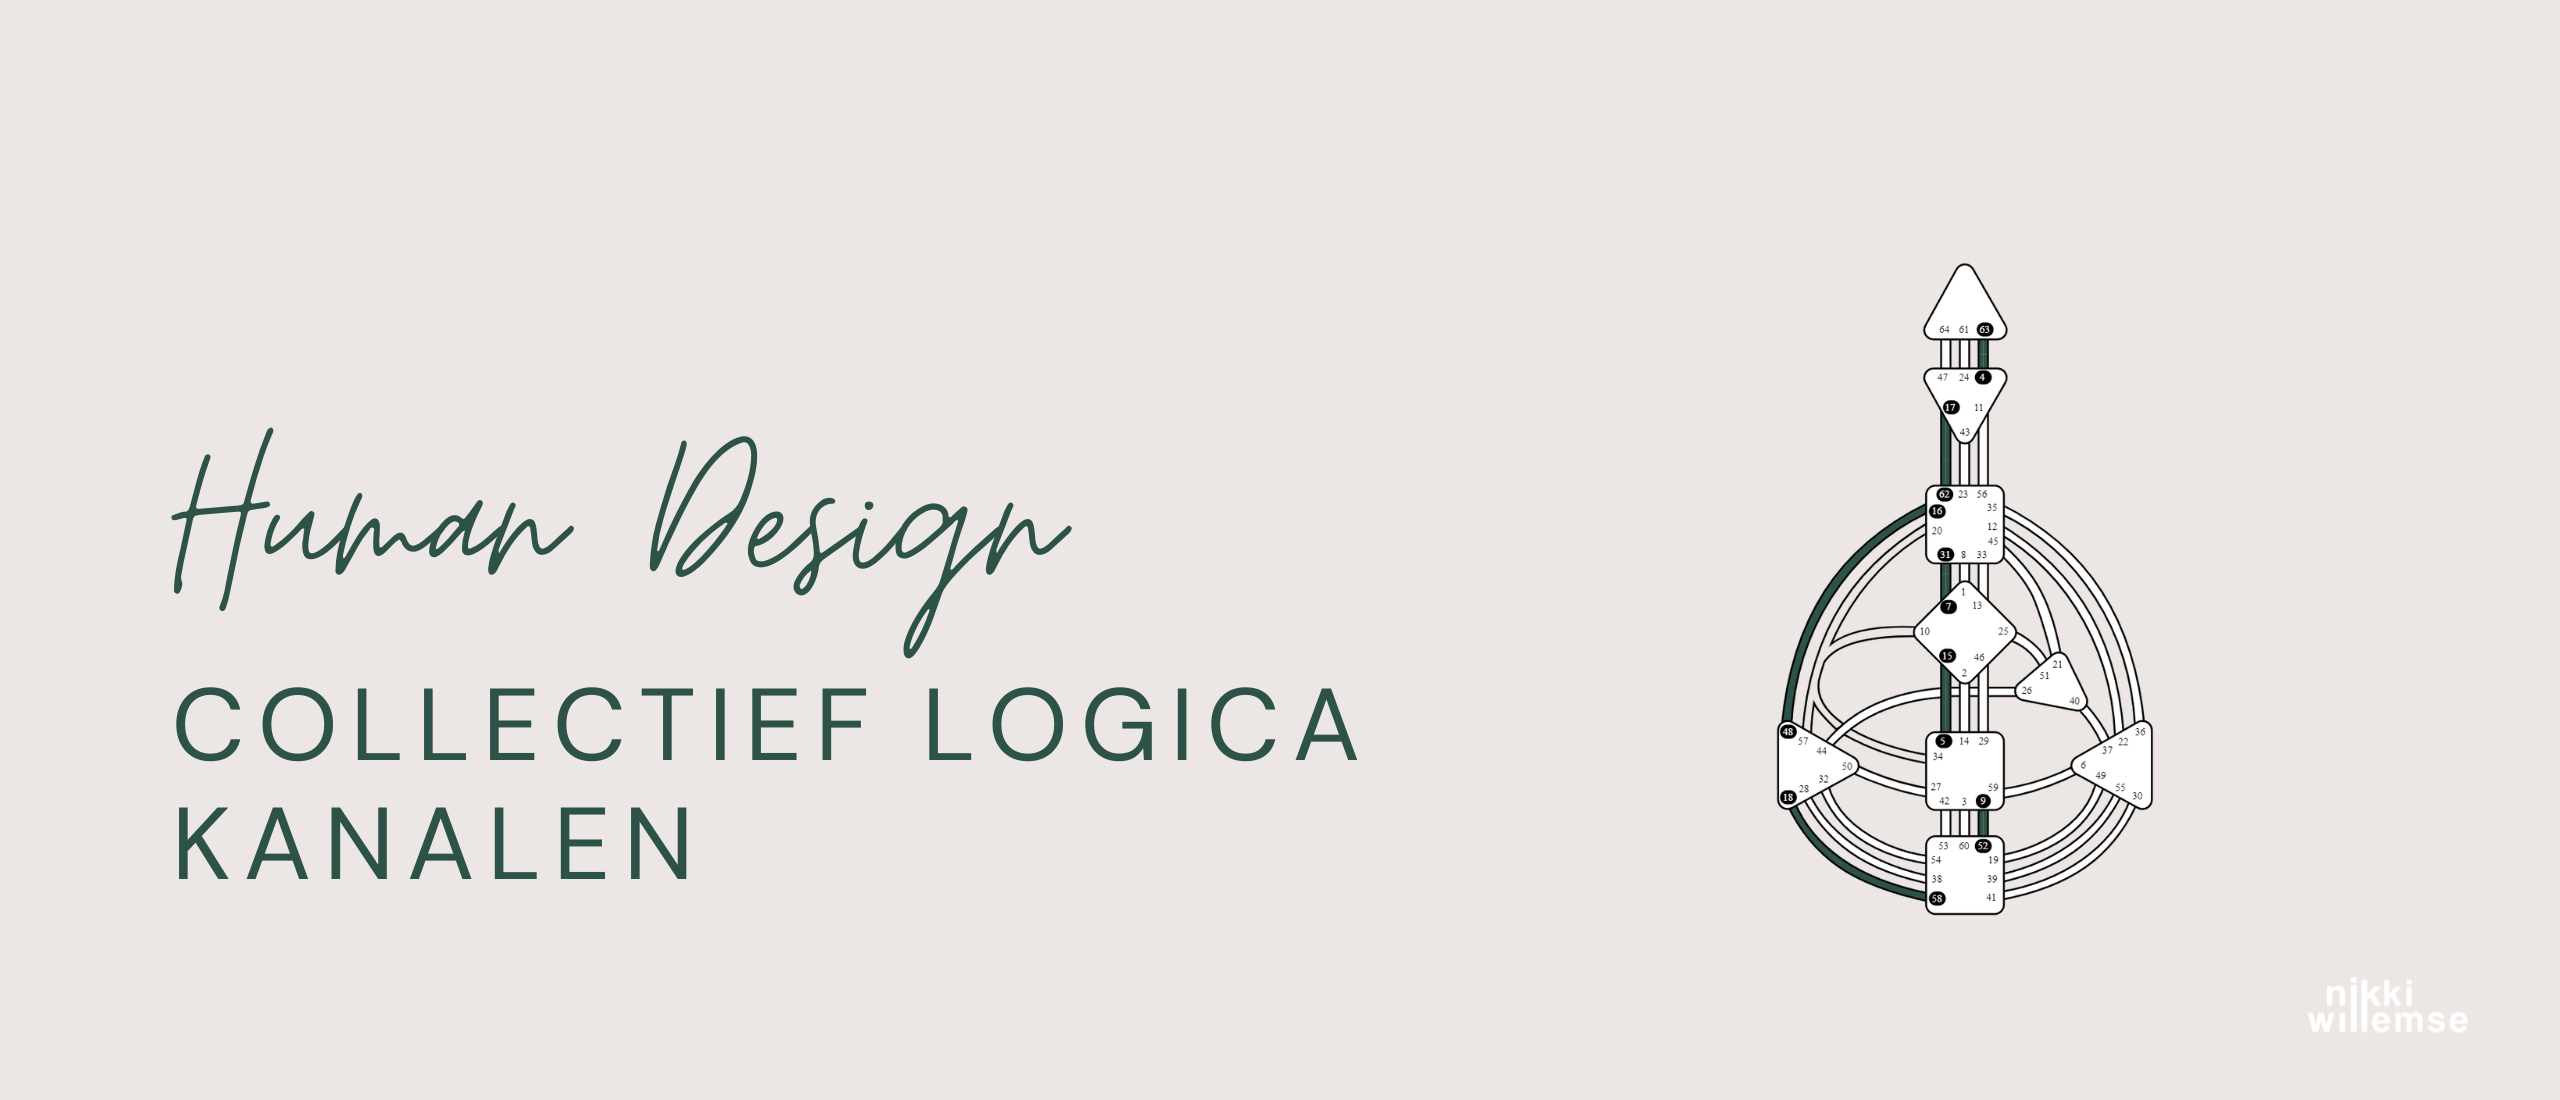 De Human Design collectief logica kanalen